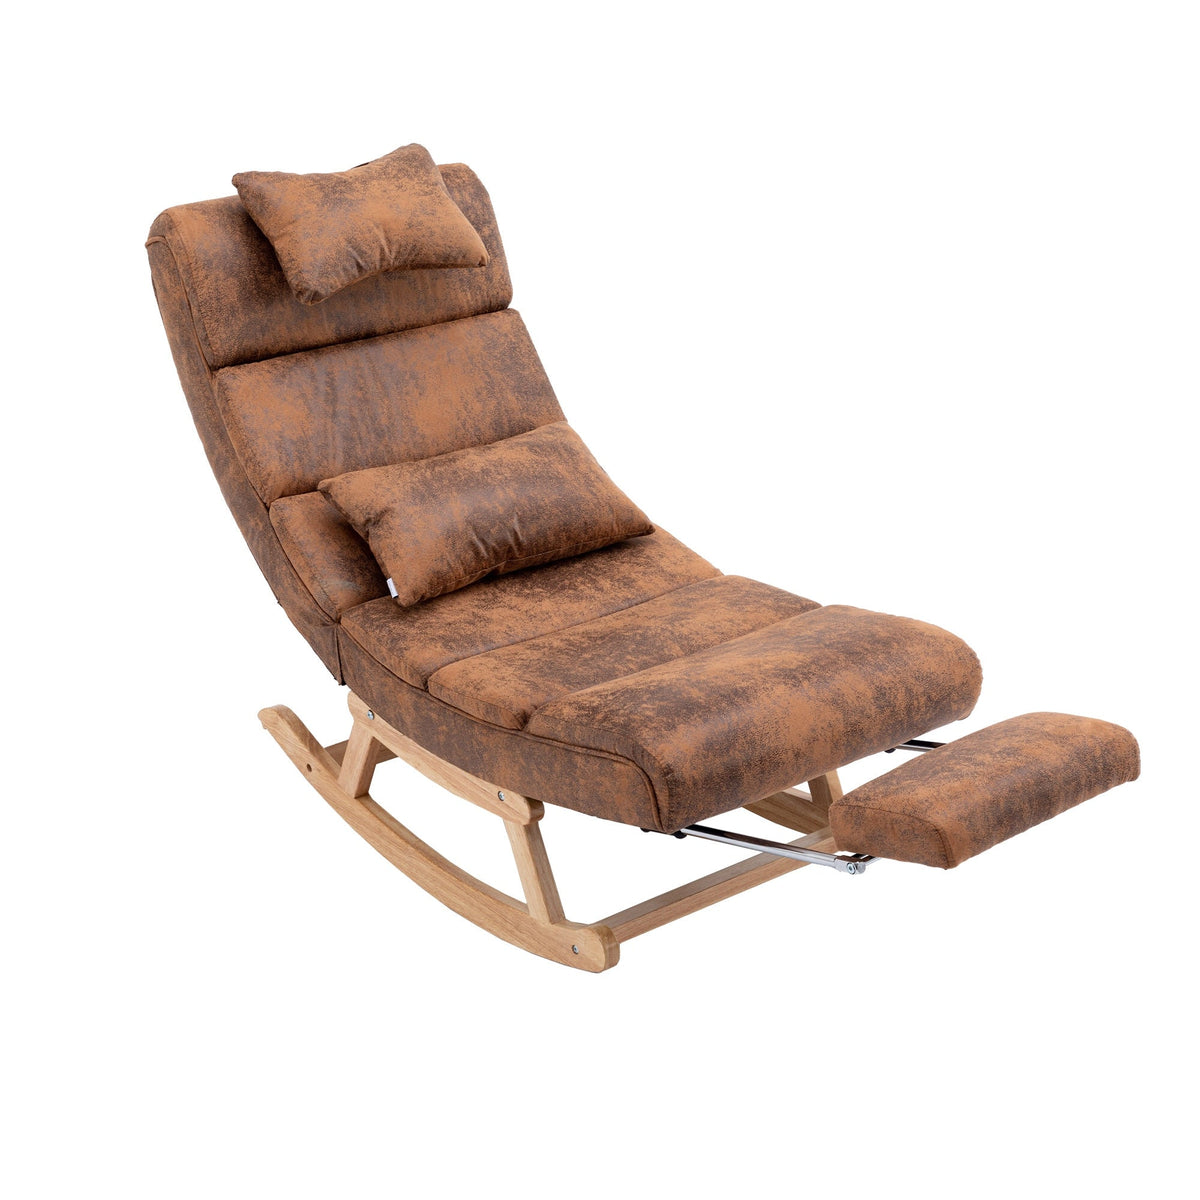 Homio Decor Living Room Coffee / United States Modern Mid-Century Rocking Chair